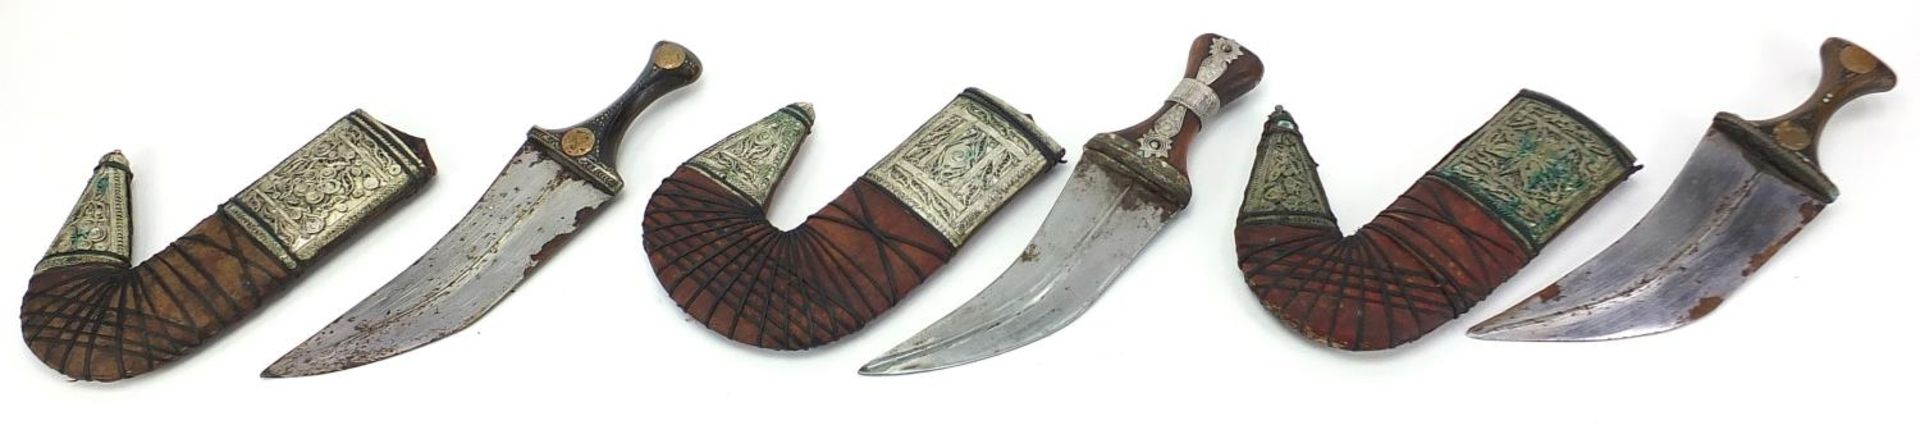 Three Islamic jambiya daggers with horn handles, leather sheaths and white metal mounts, each